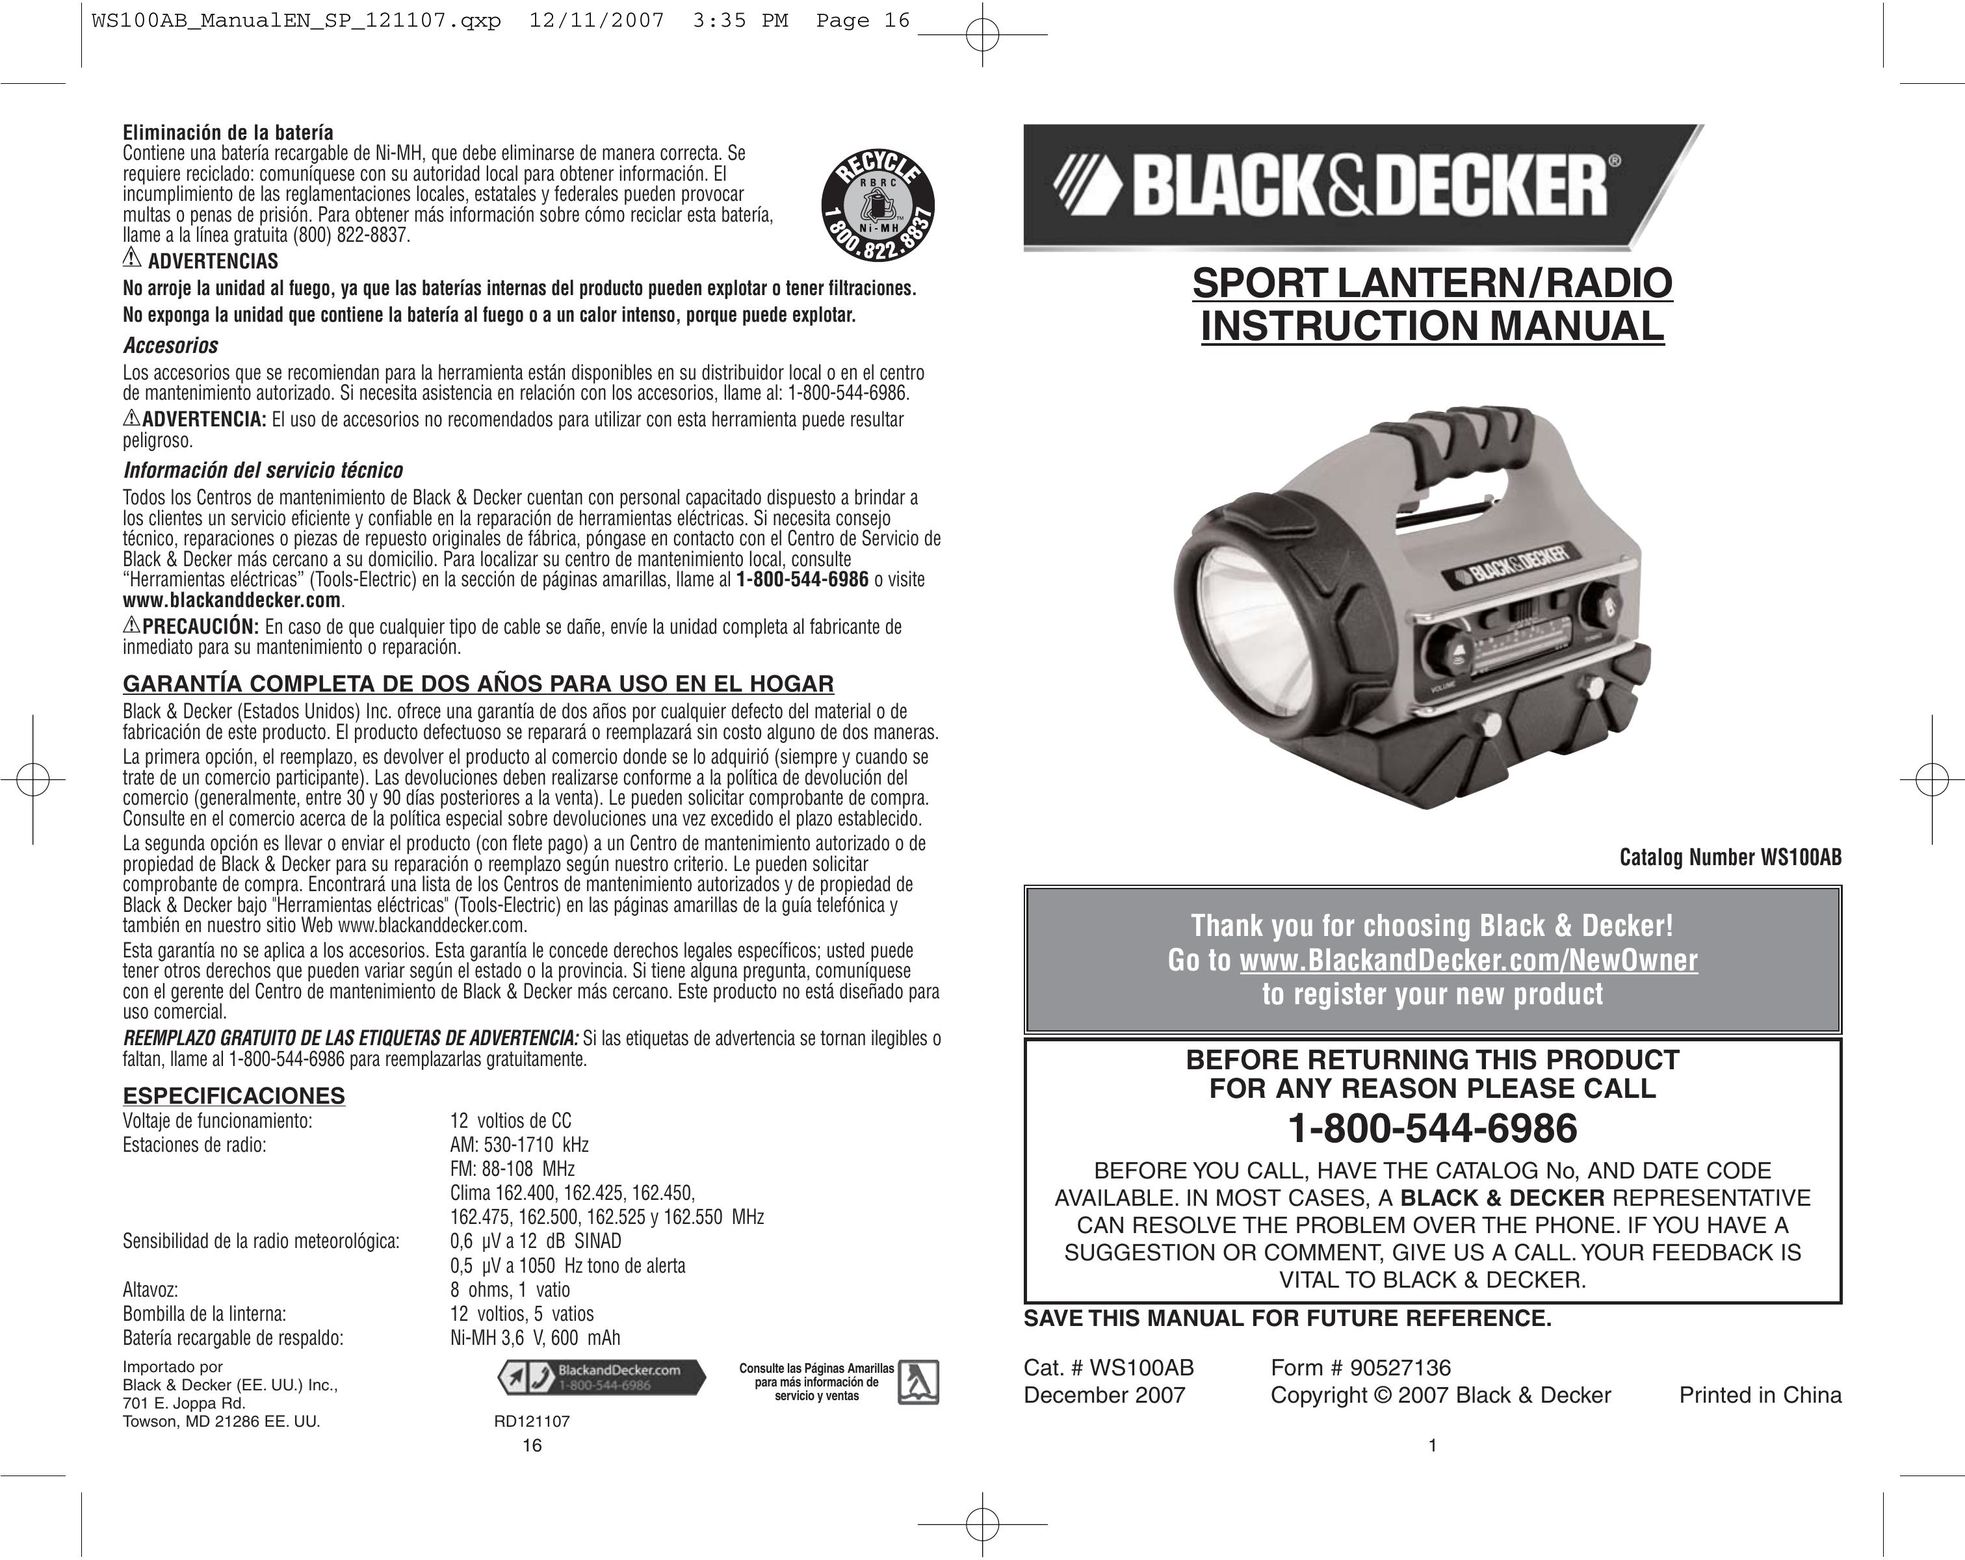 Black & Decker 90527136 Radio User Manual